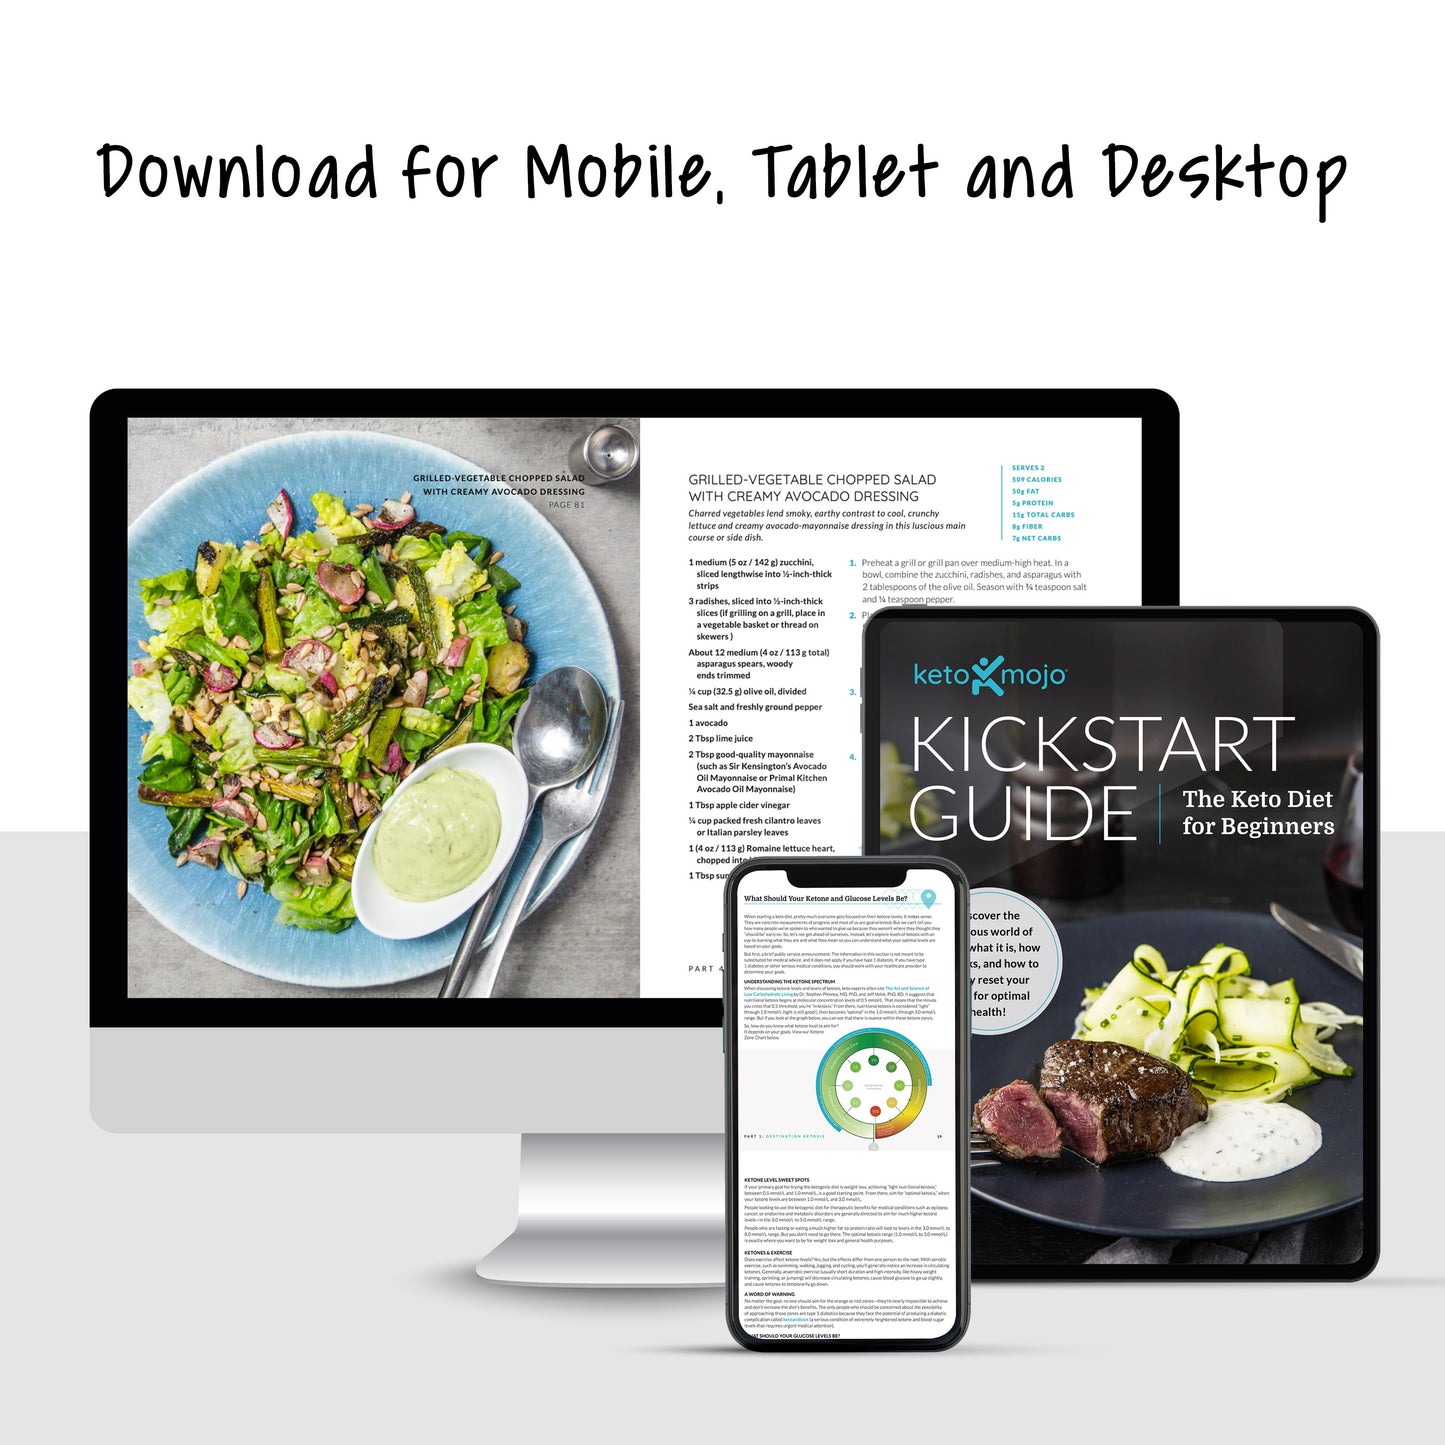 Guía de Kickstart: Keto para principiantes (libro electrónico digital)